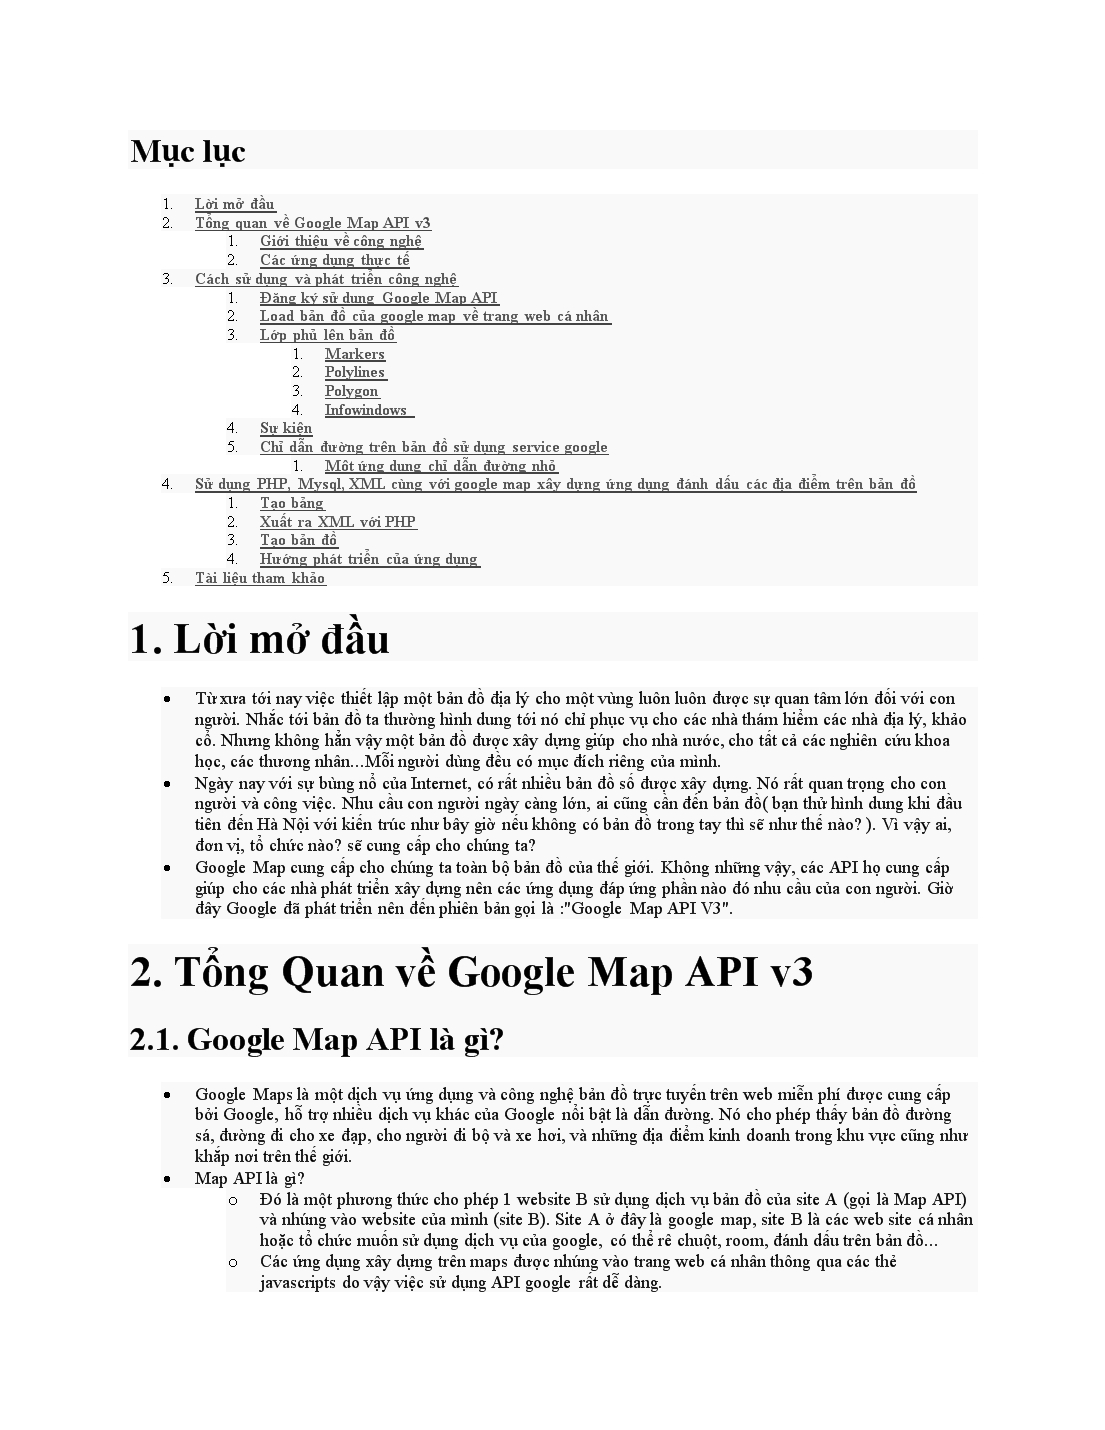 Google Map API v3 trang 1